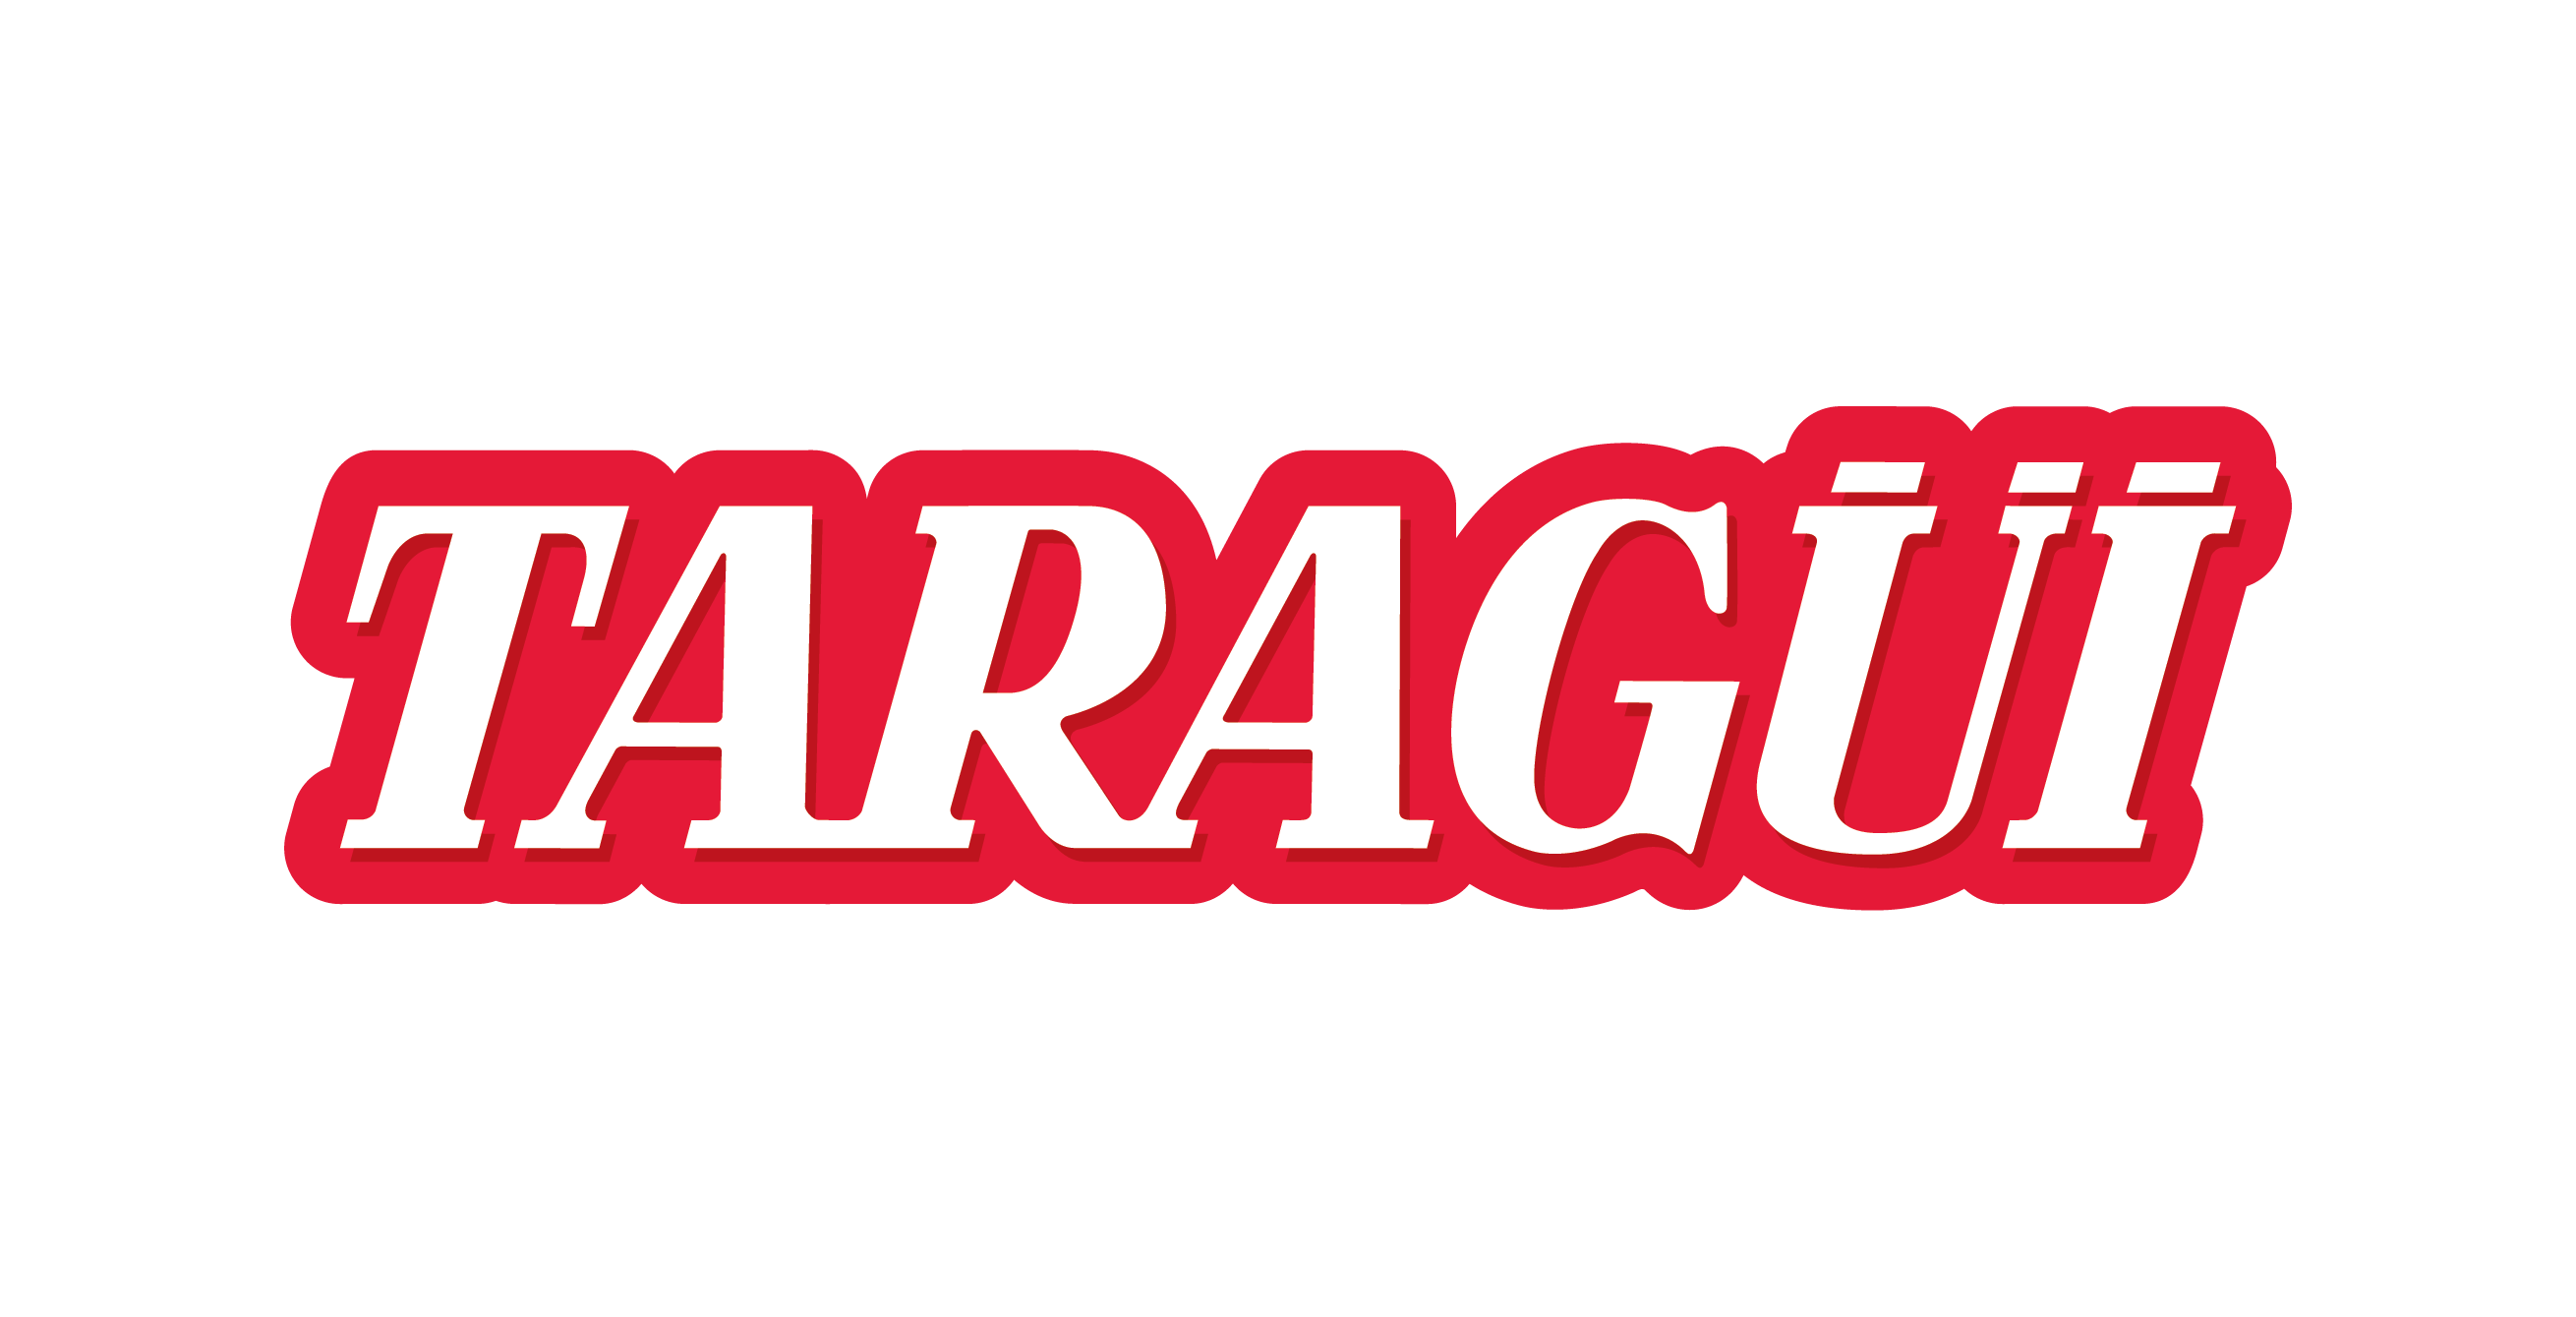 taragui logo.png